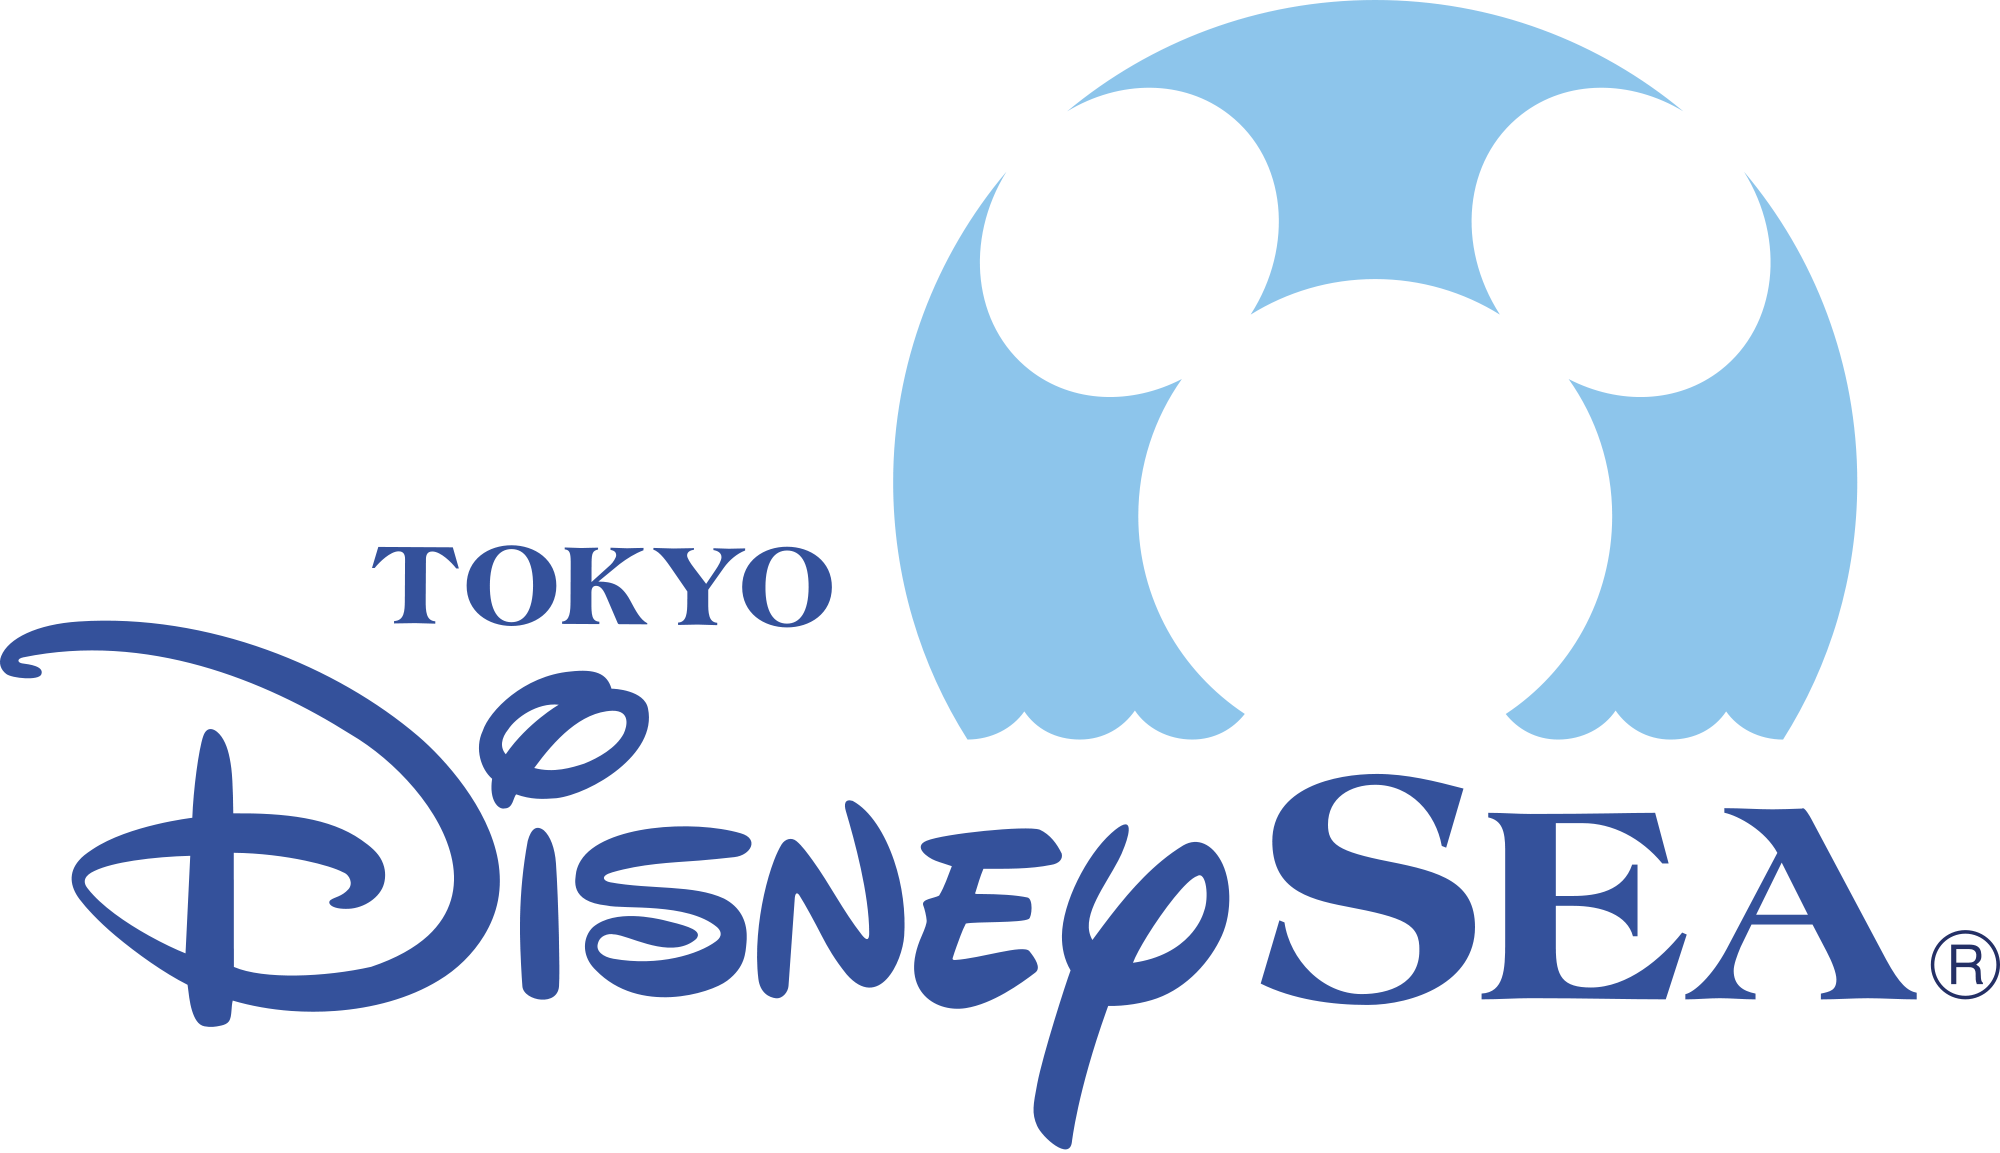 Tokyo Disneysea Logo